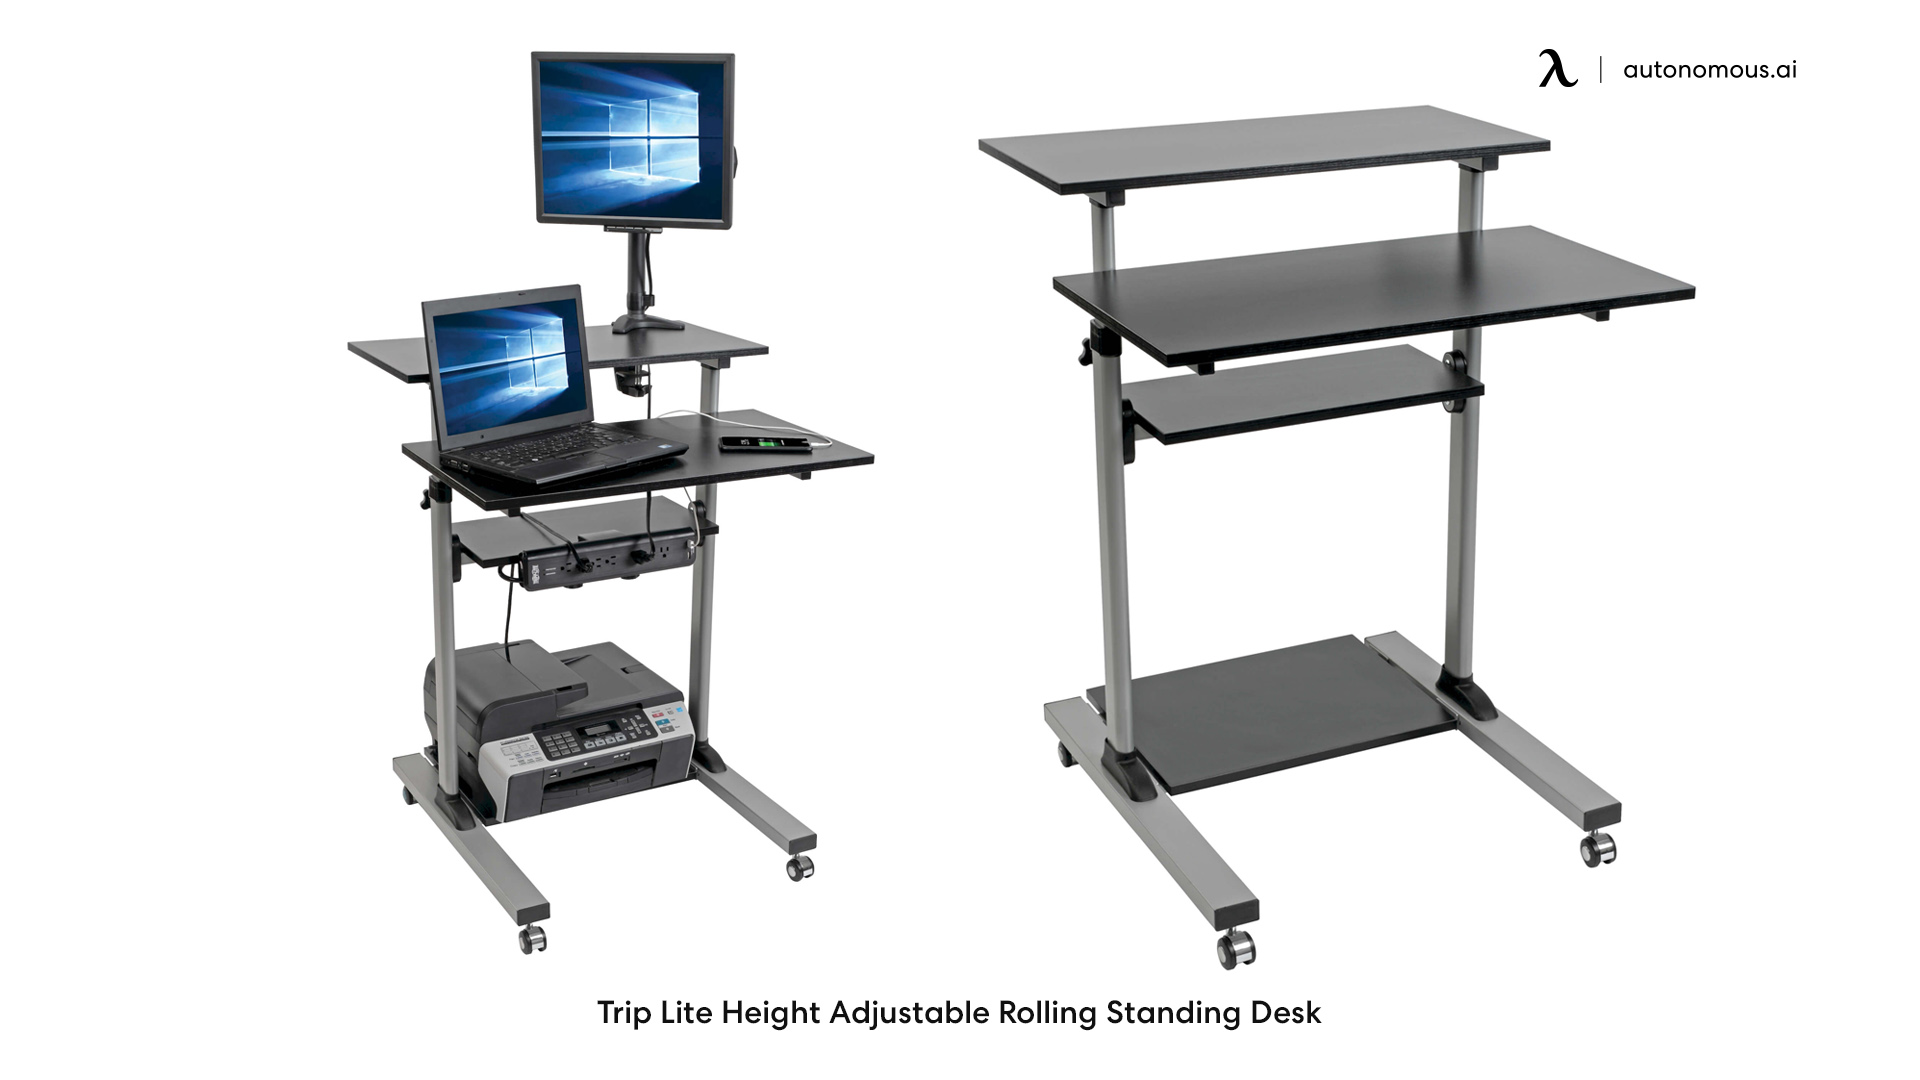 Trip Lite Height Adjustable Rolling Standing Desk